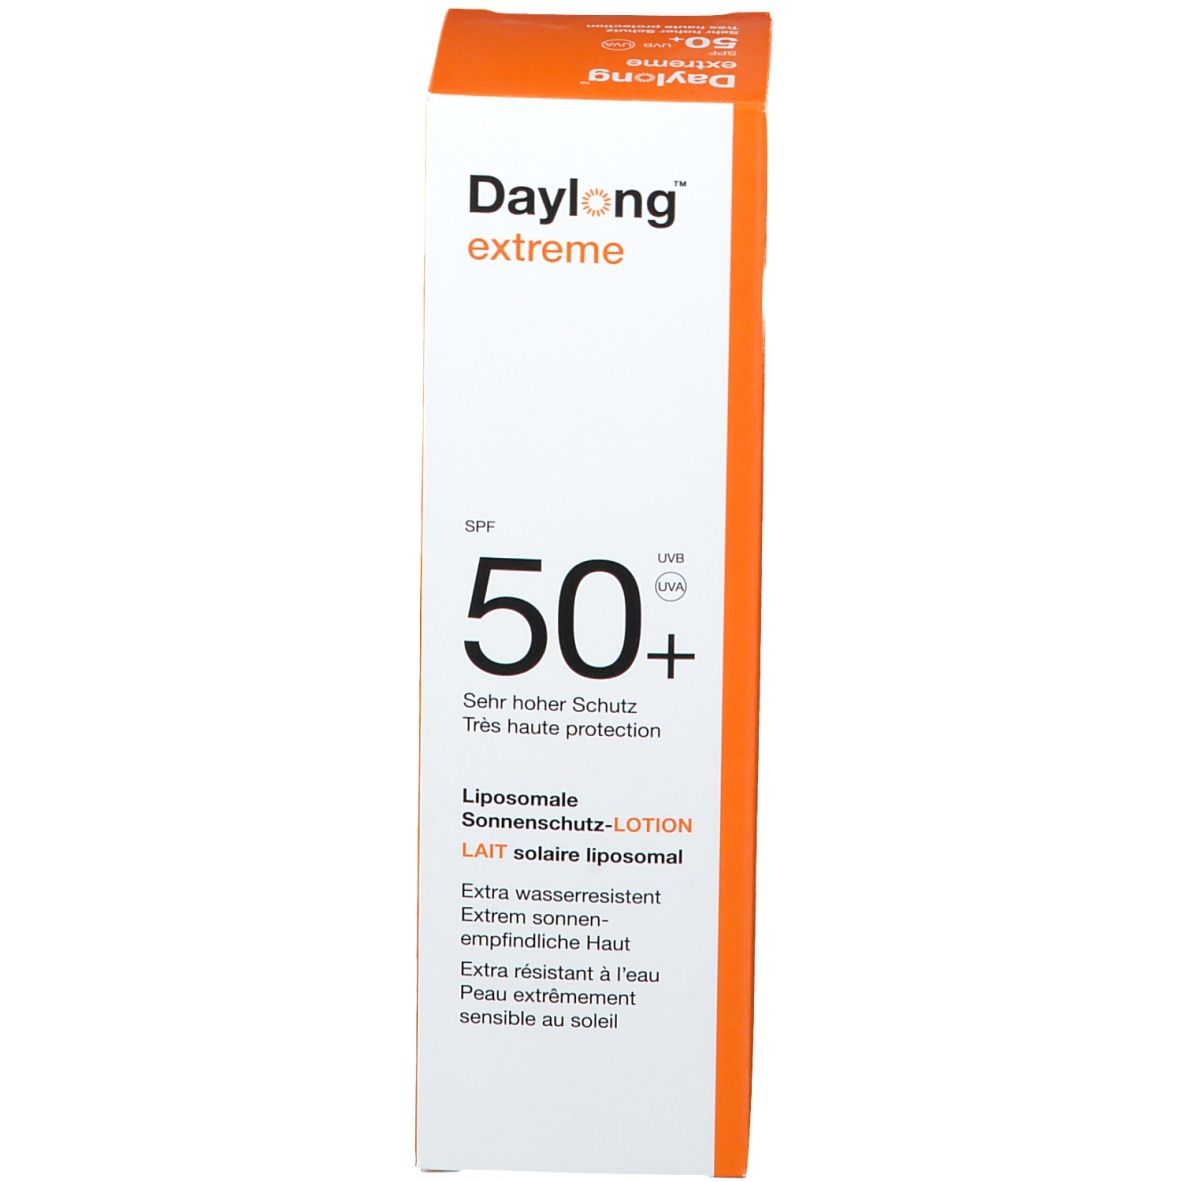 Daylong® Extreme SPF 50+ Lait solaire Liposomal